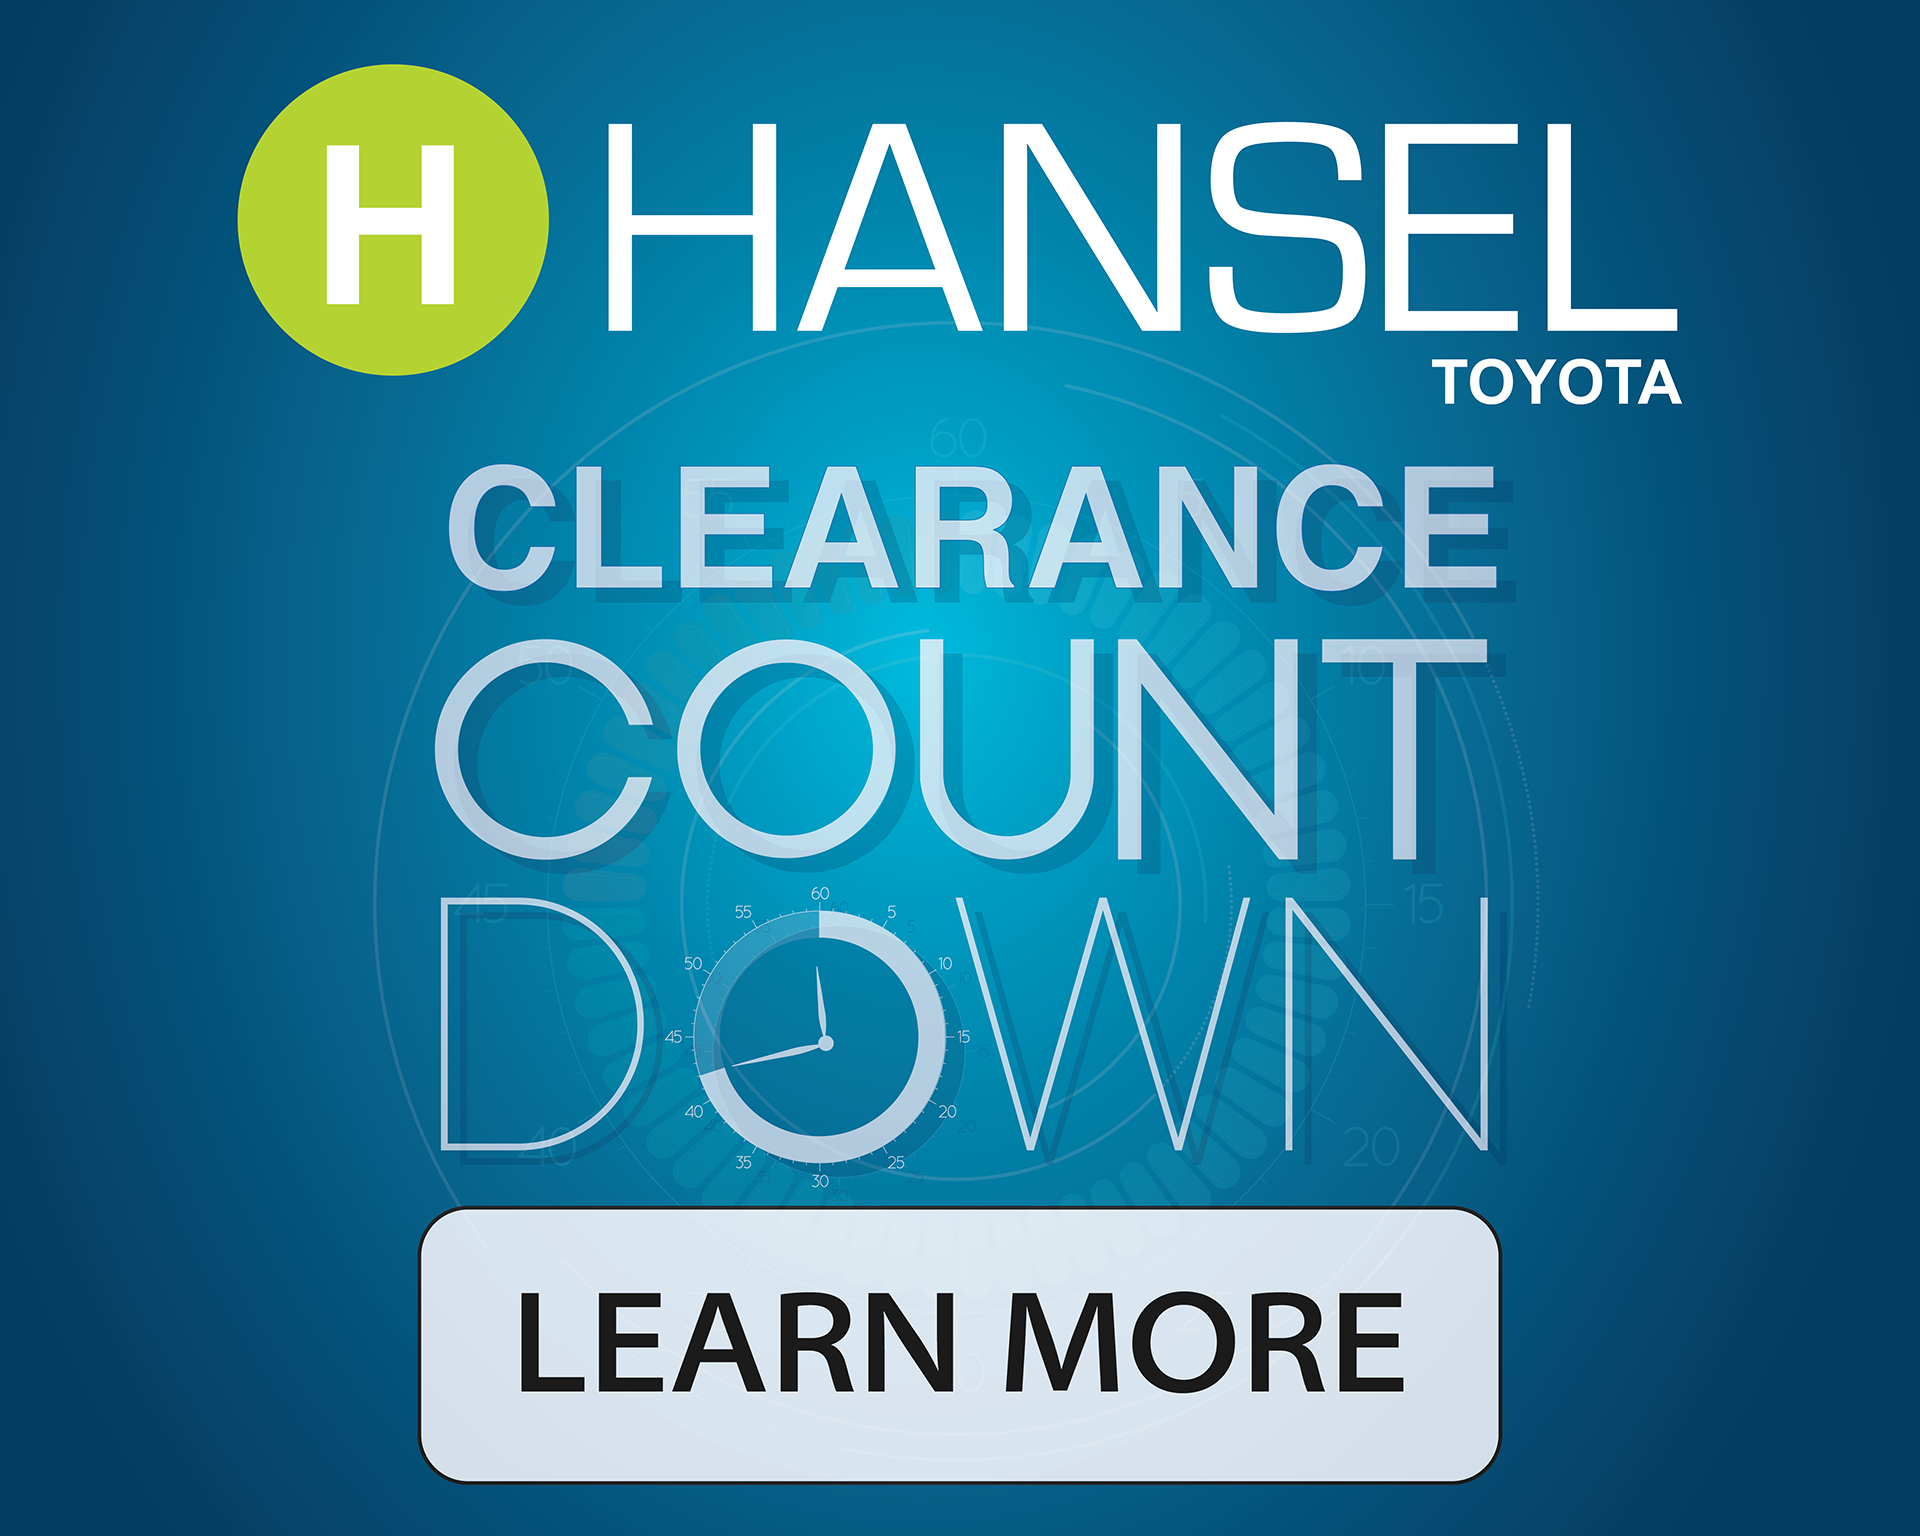 Hansel Auto Group Santa Rosa CA